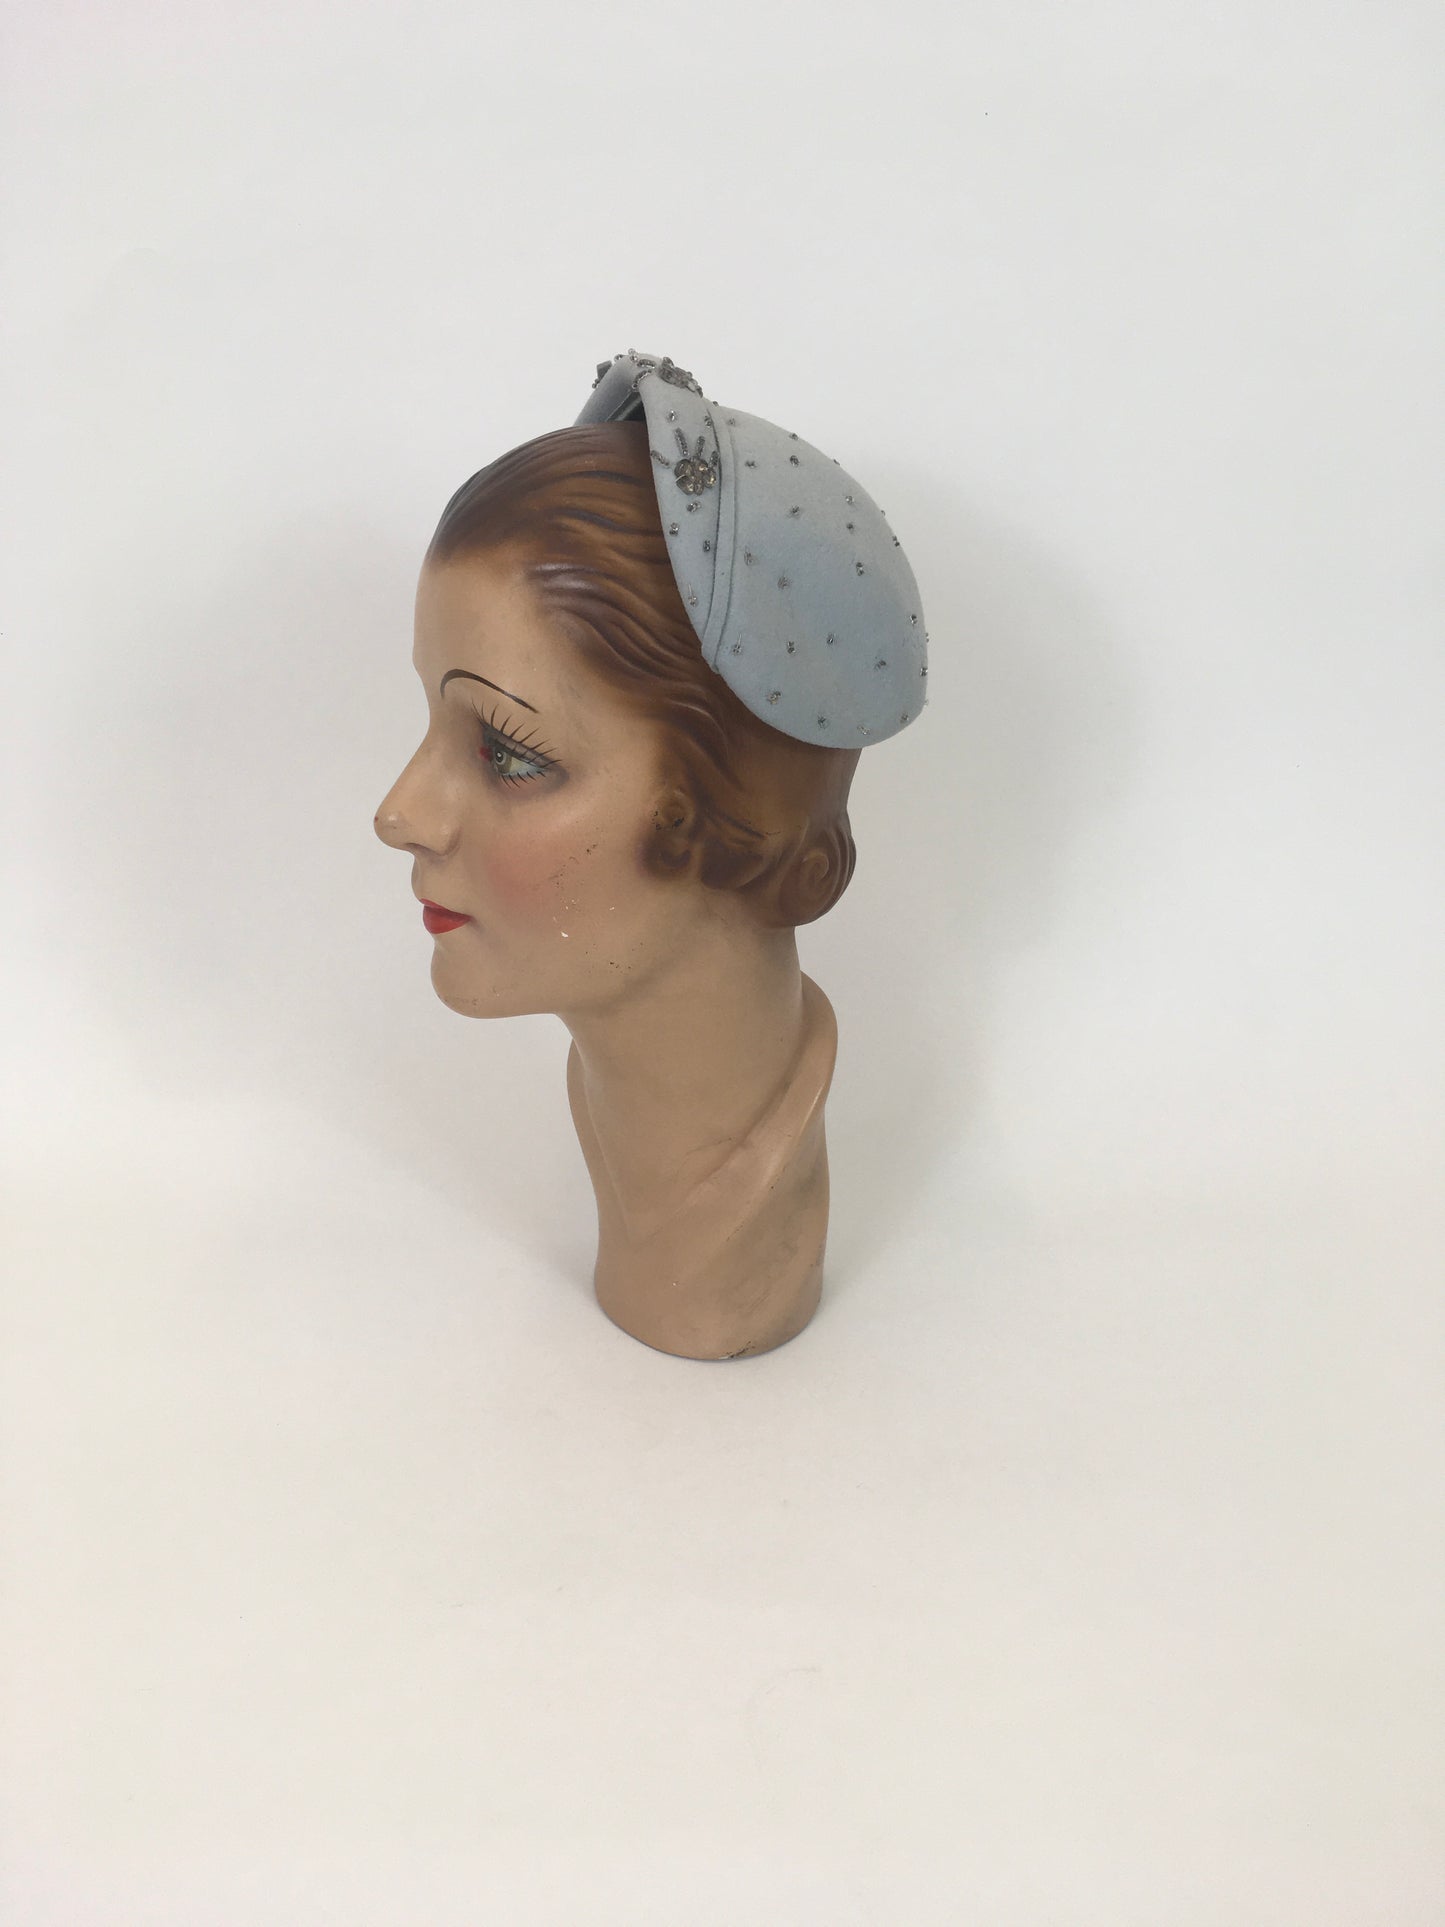 Original 1950s Darling Felt Headpiece - In A Pale Blue With Beadwork